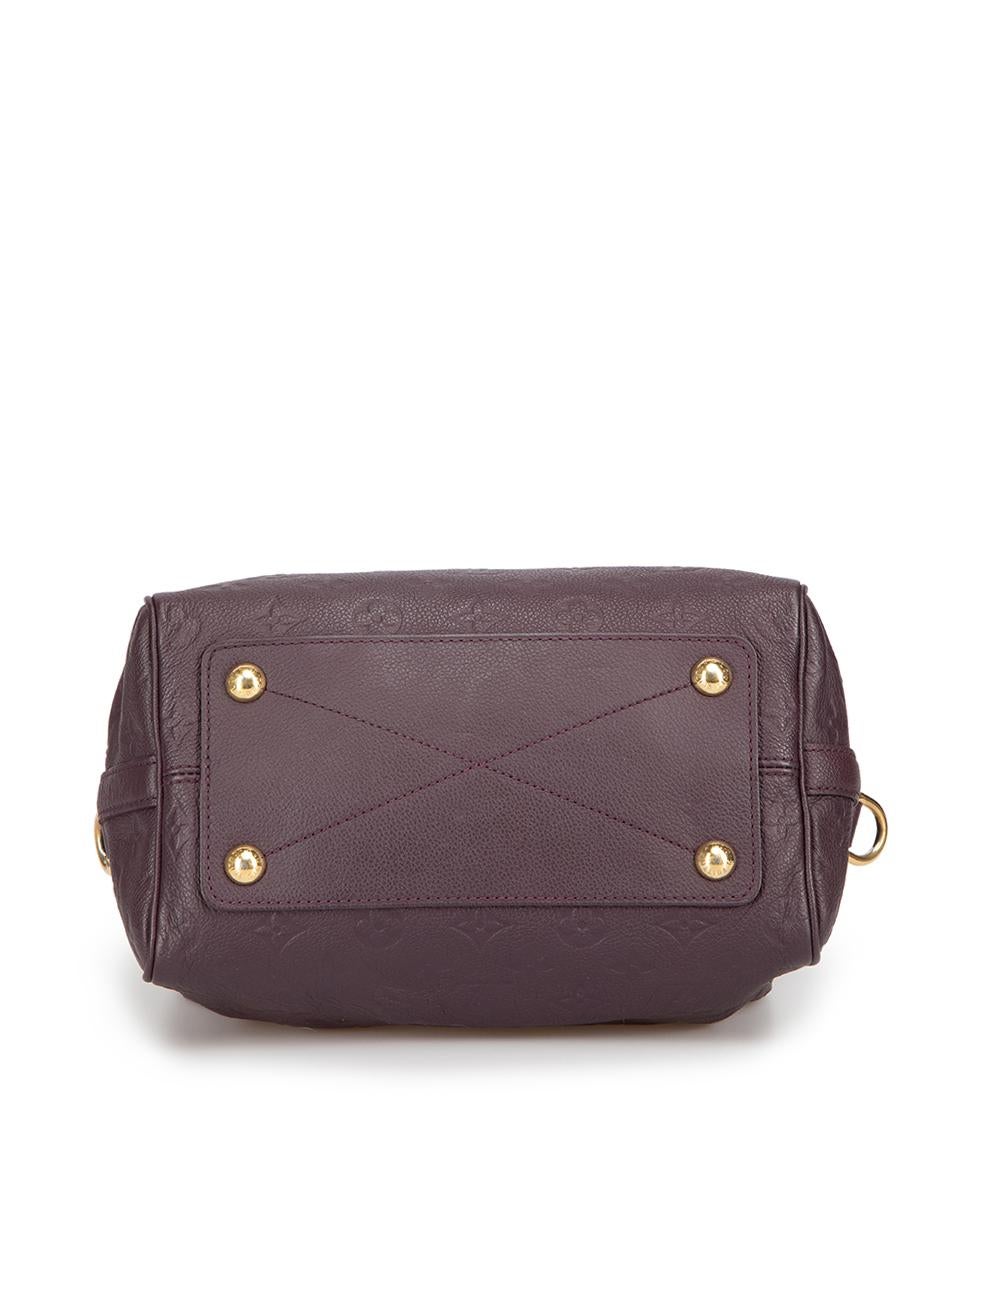 Louis Vuitton Women's 2012 Purple Plum Leather Monogram Speedy 25 Bag 1